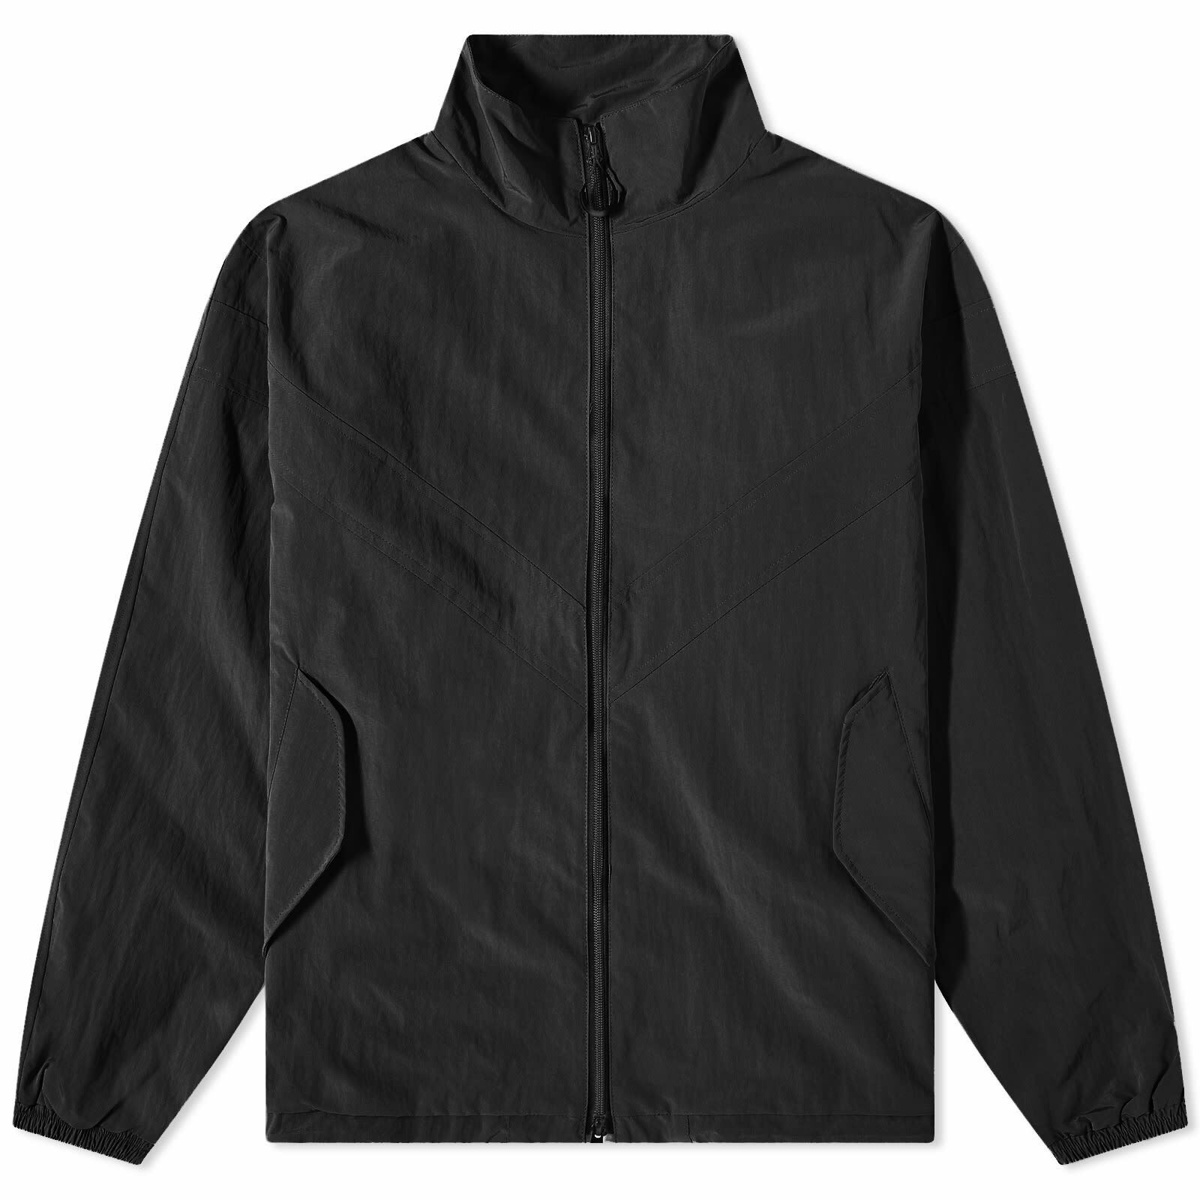 FrizmWORKS Men's IPFU Track Jacket in Black FrizmWORKS